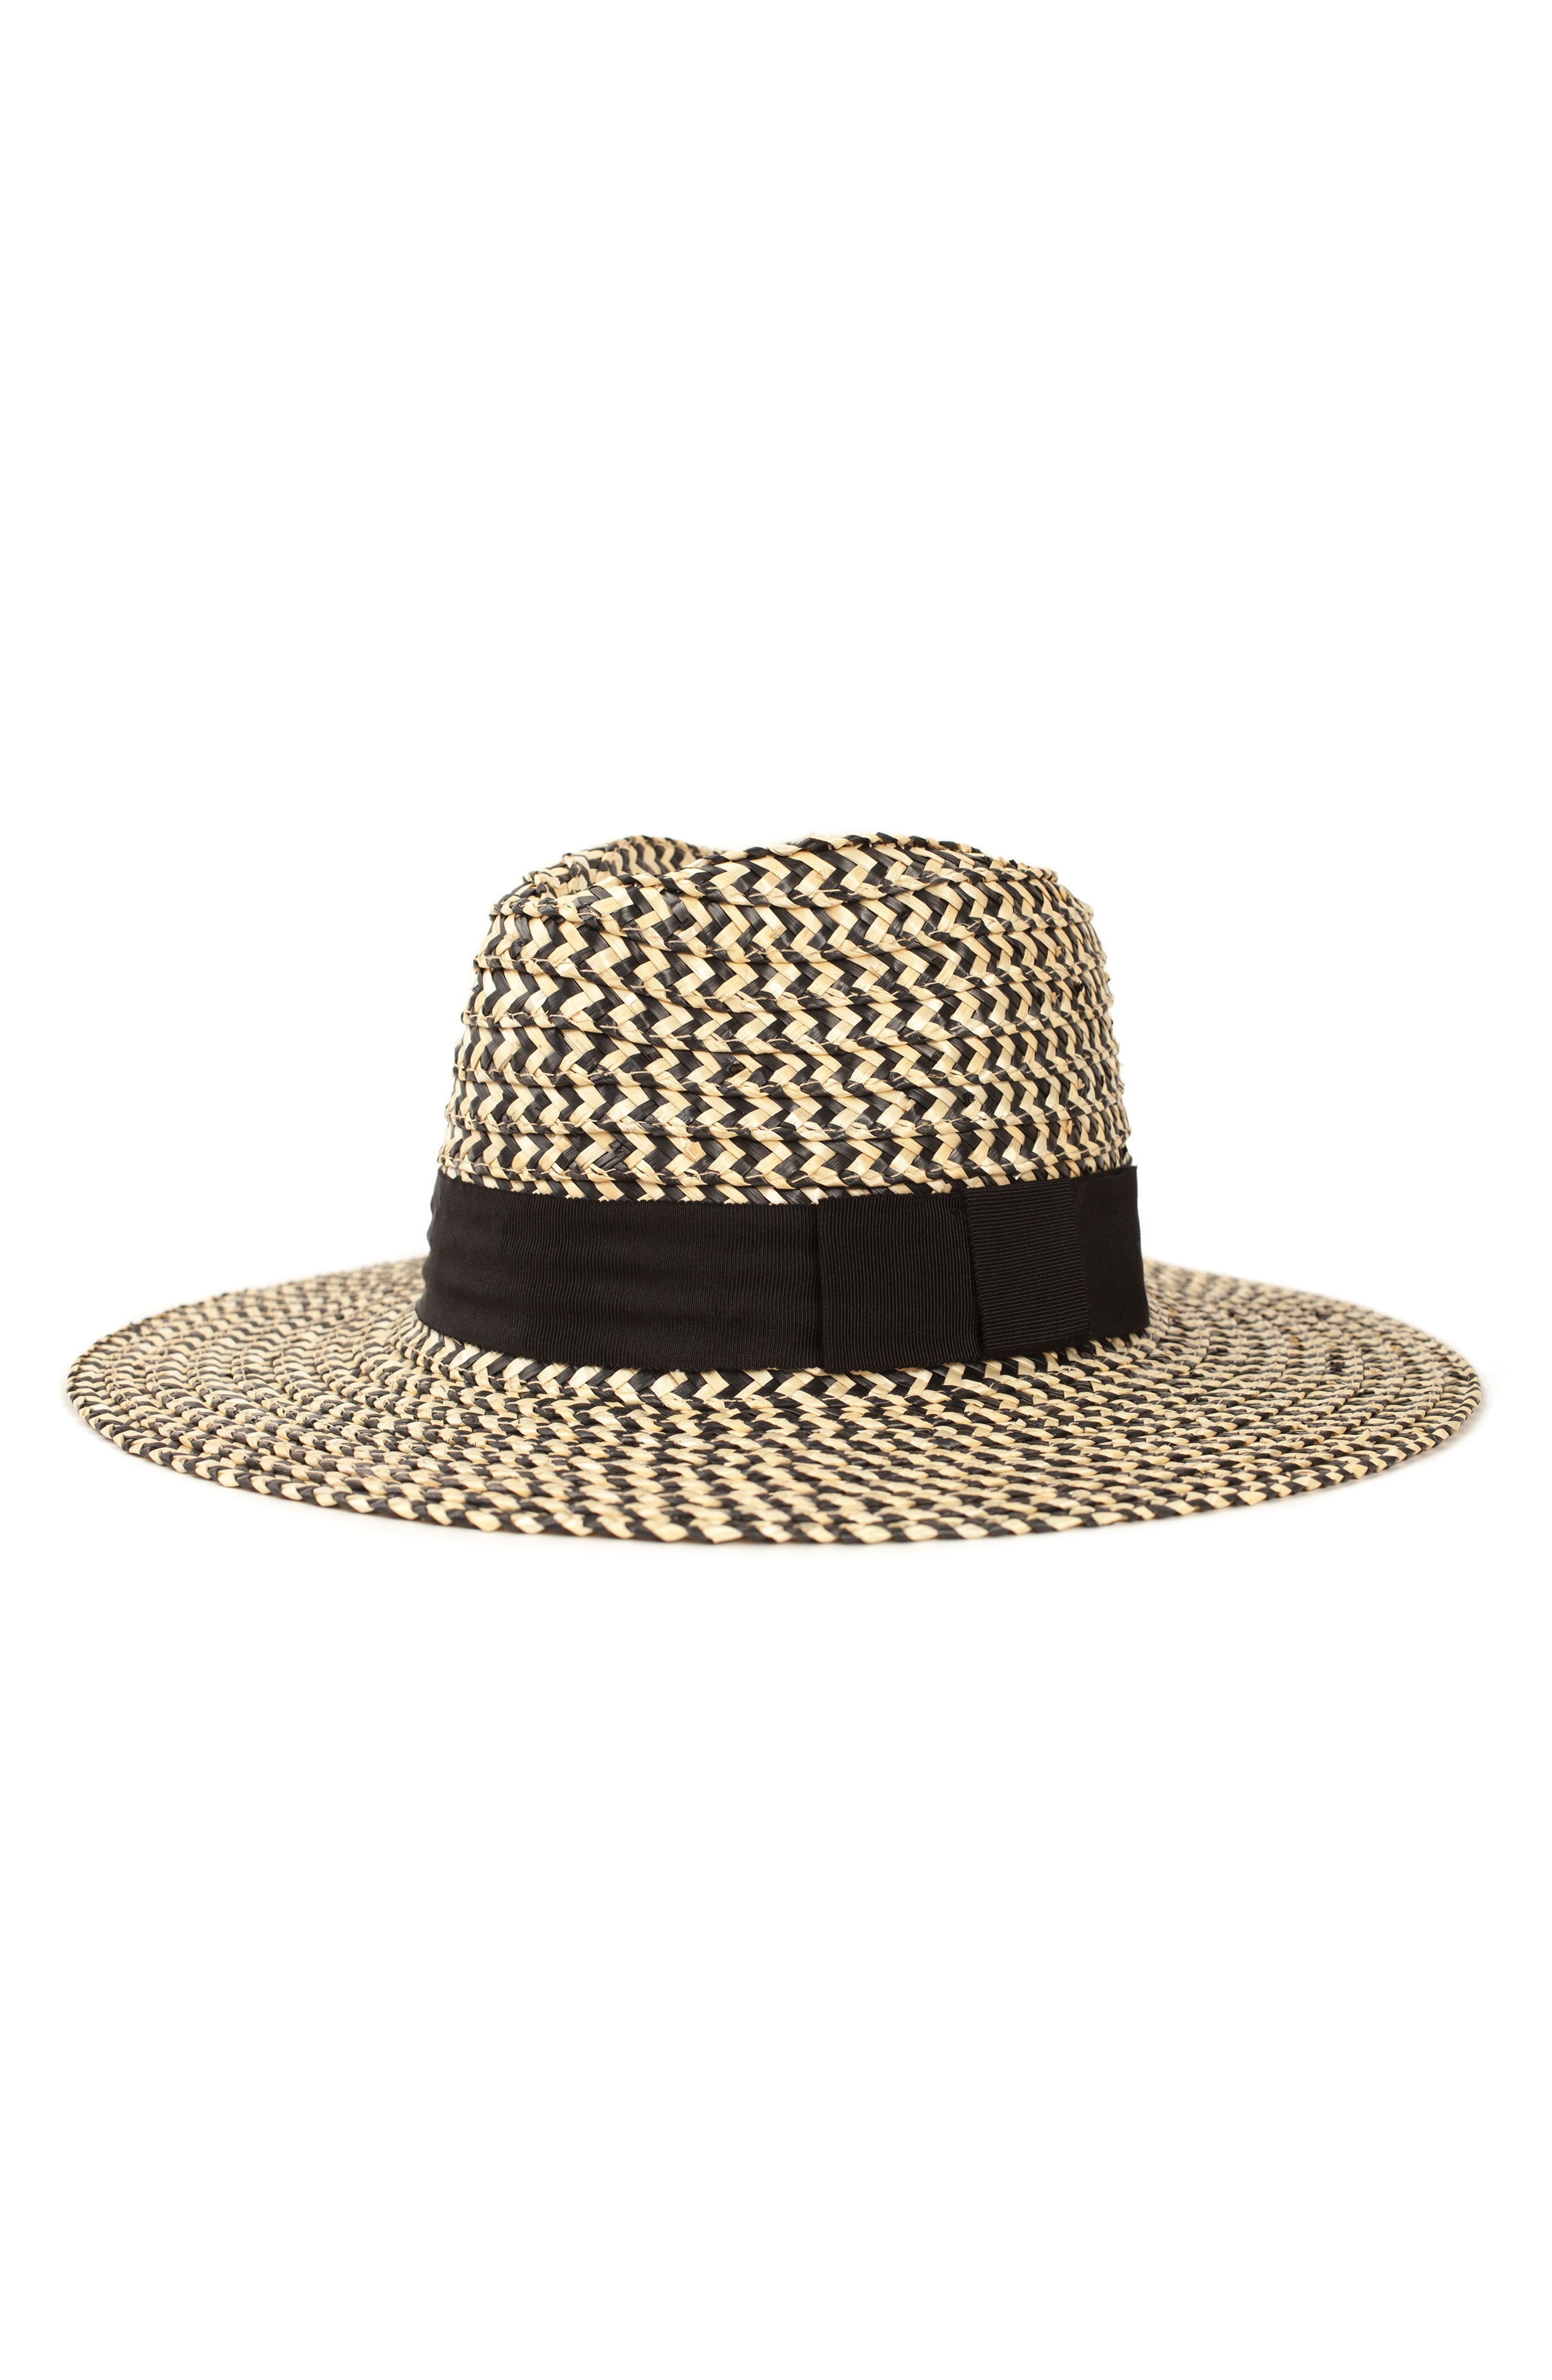 Brixton 'Joanna' Straw Hat